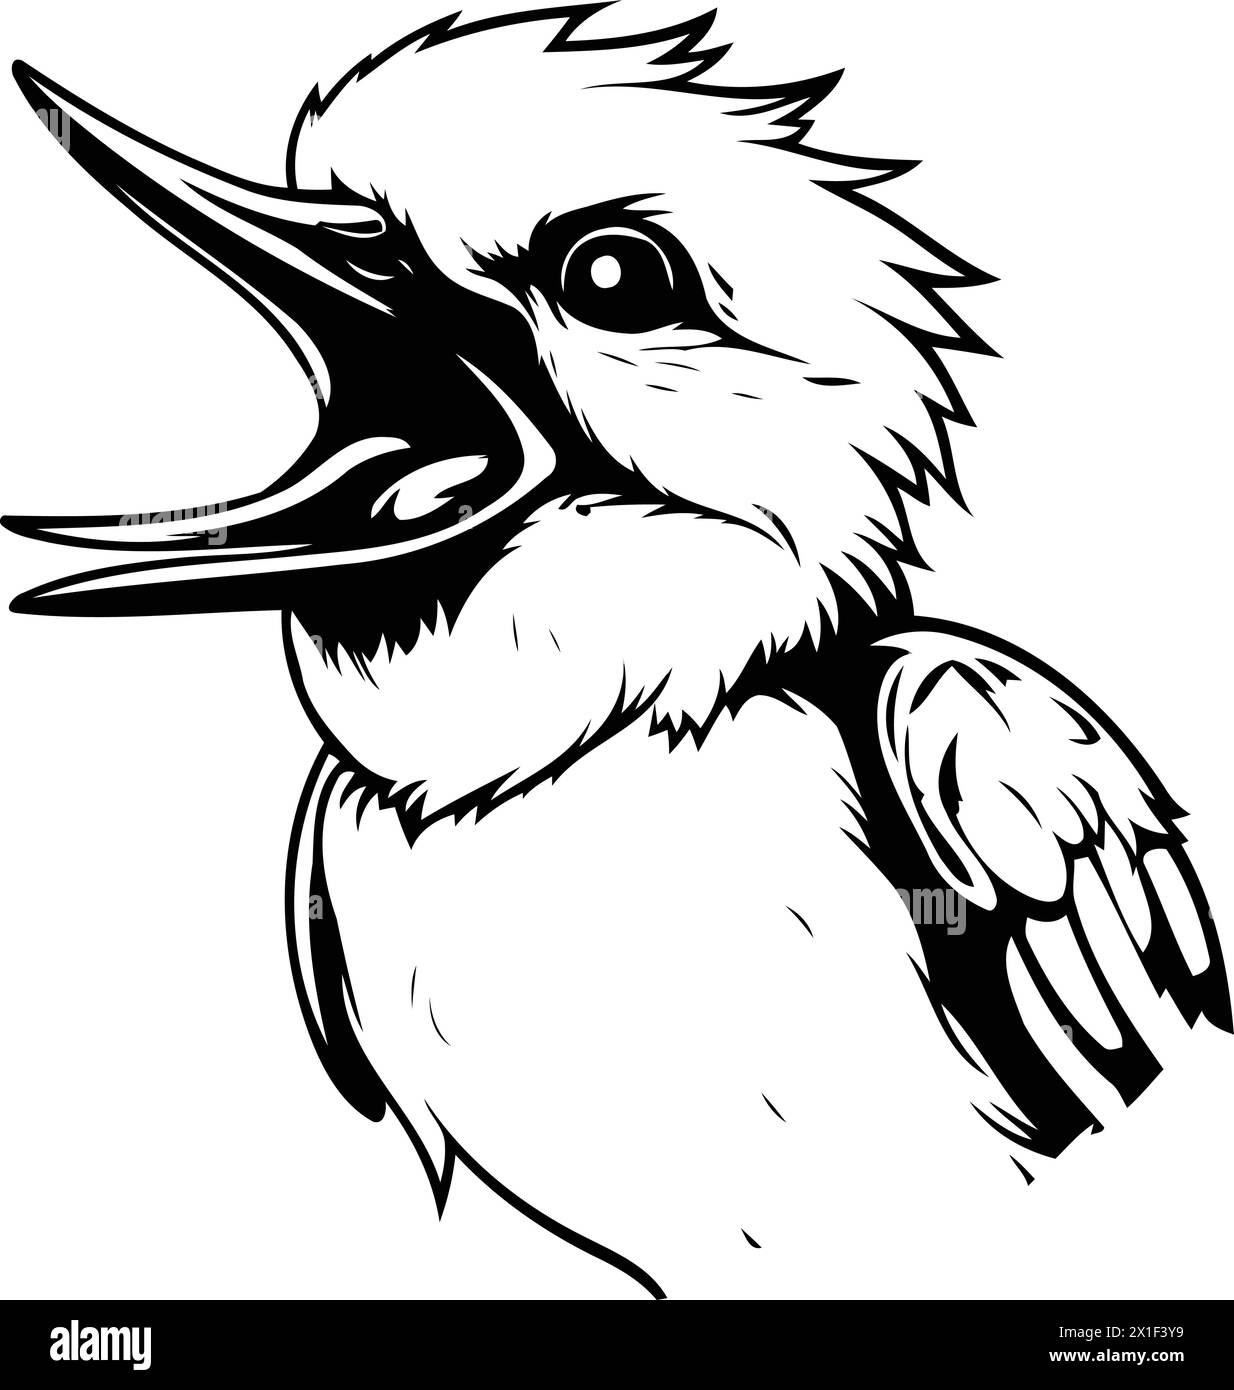 Kookaburra bird with open mouth. Vector illustration. Stock Vector